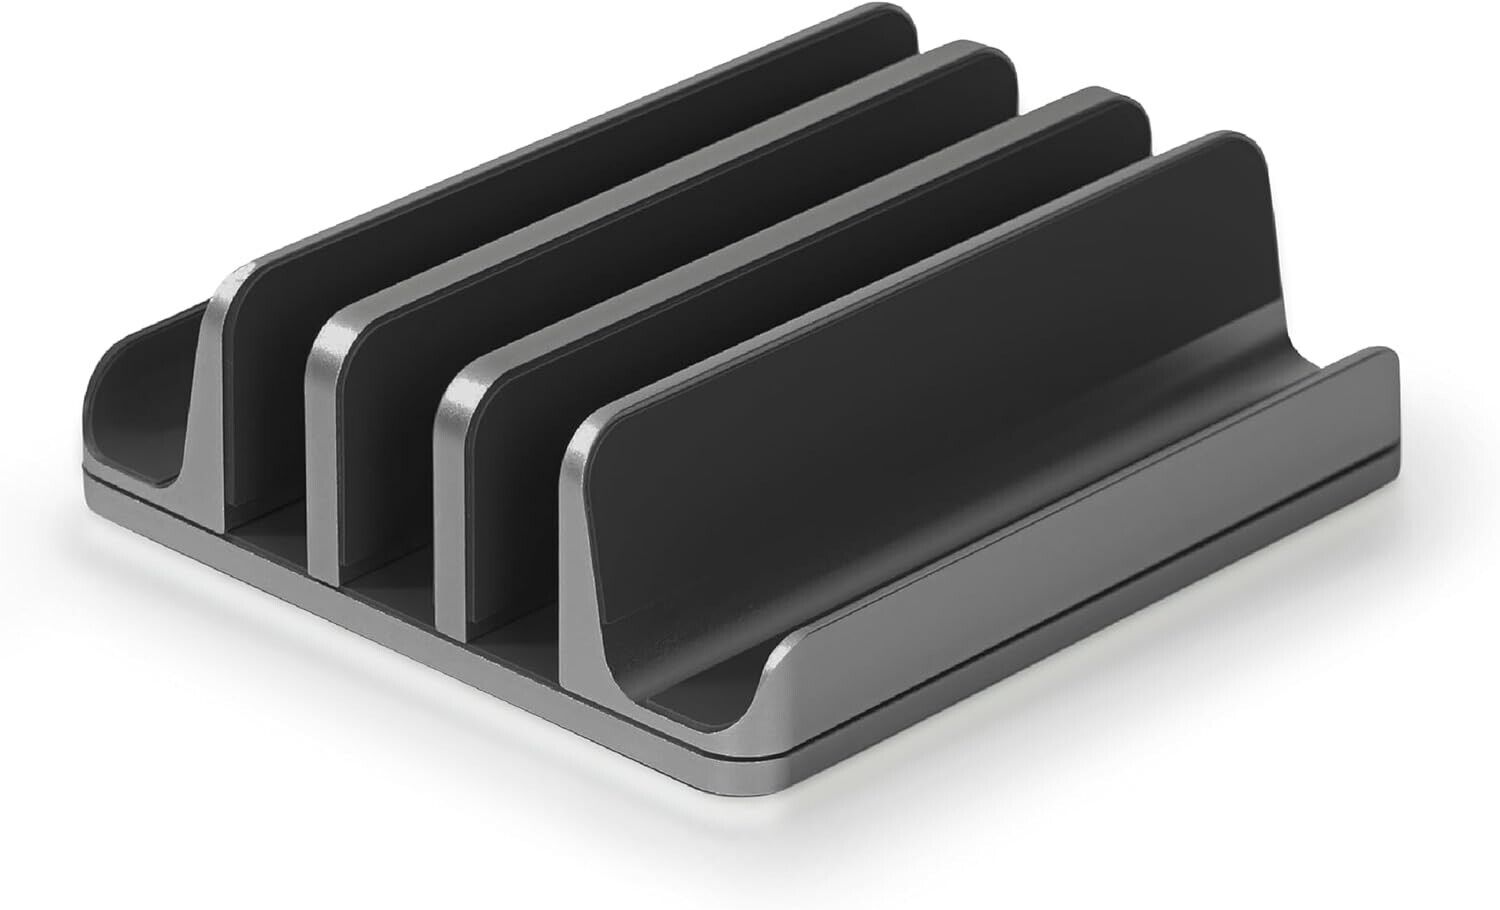 Elestoria Adjustable Multiple Laptop Vertical Stand Holds 5 Devices - Black